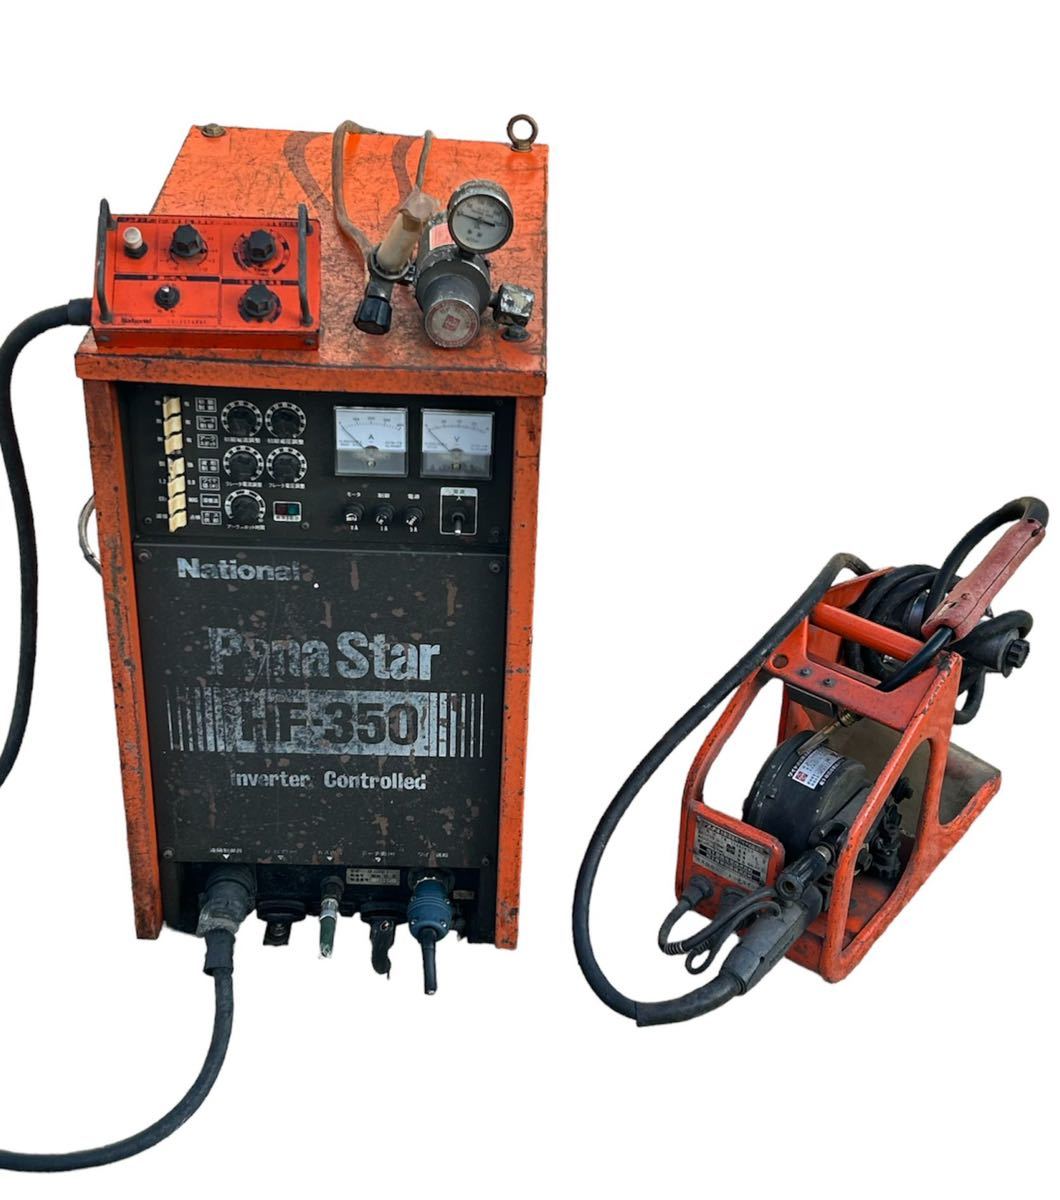 NATIONAL PANA STAR HF-350 パナスター インバータ制御CO半自動溶接機　Inverter controlled //動作未確認//_画像1